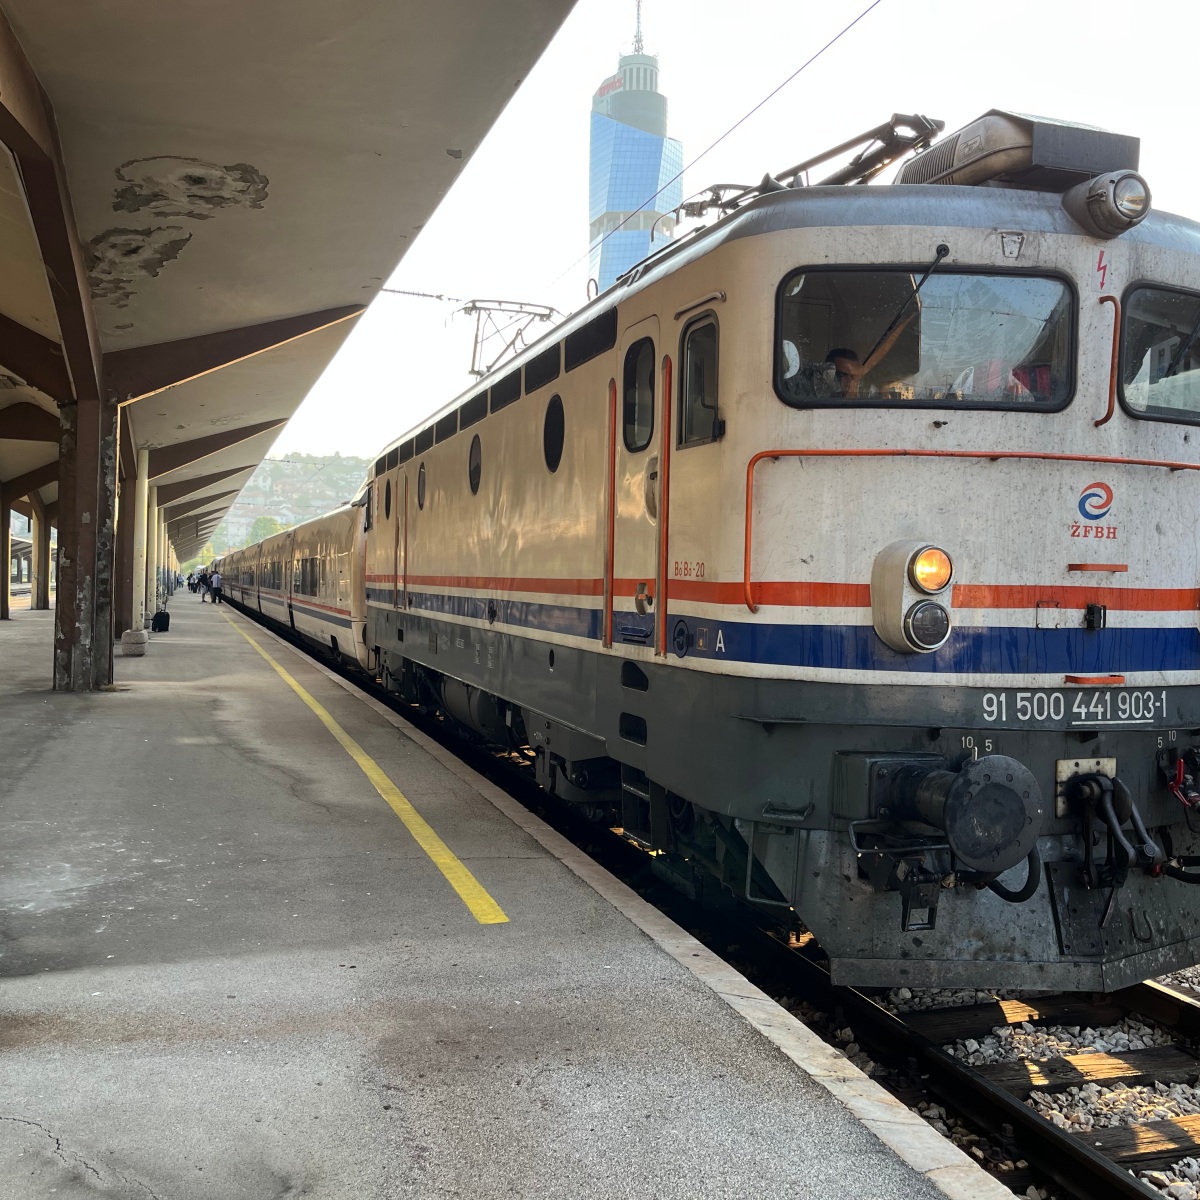 Back after 8 years – Sarajevo, Bosnia & Herzegovina 🇧🇦 to Ploče, Croatia 🇭🇷 by train